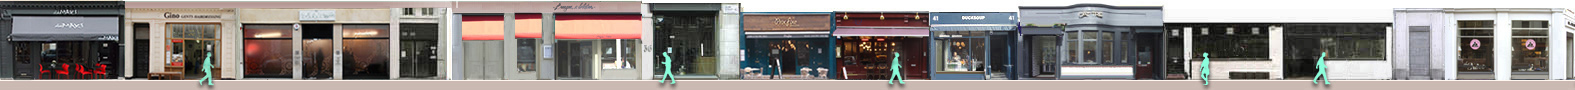 Restaurants on Soho's Dean Street: Oliver Maki, Burger and Lobster, Prix Fixe